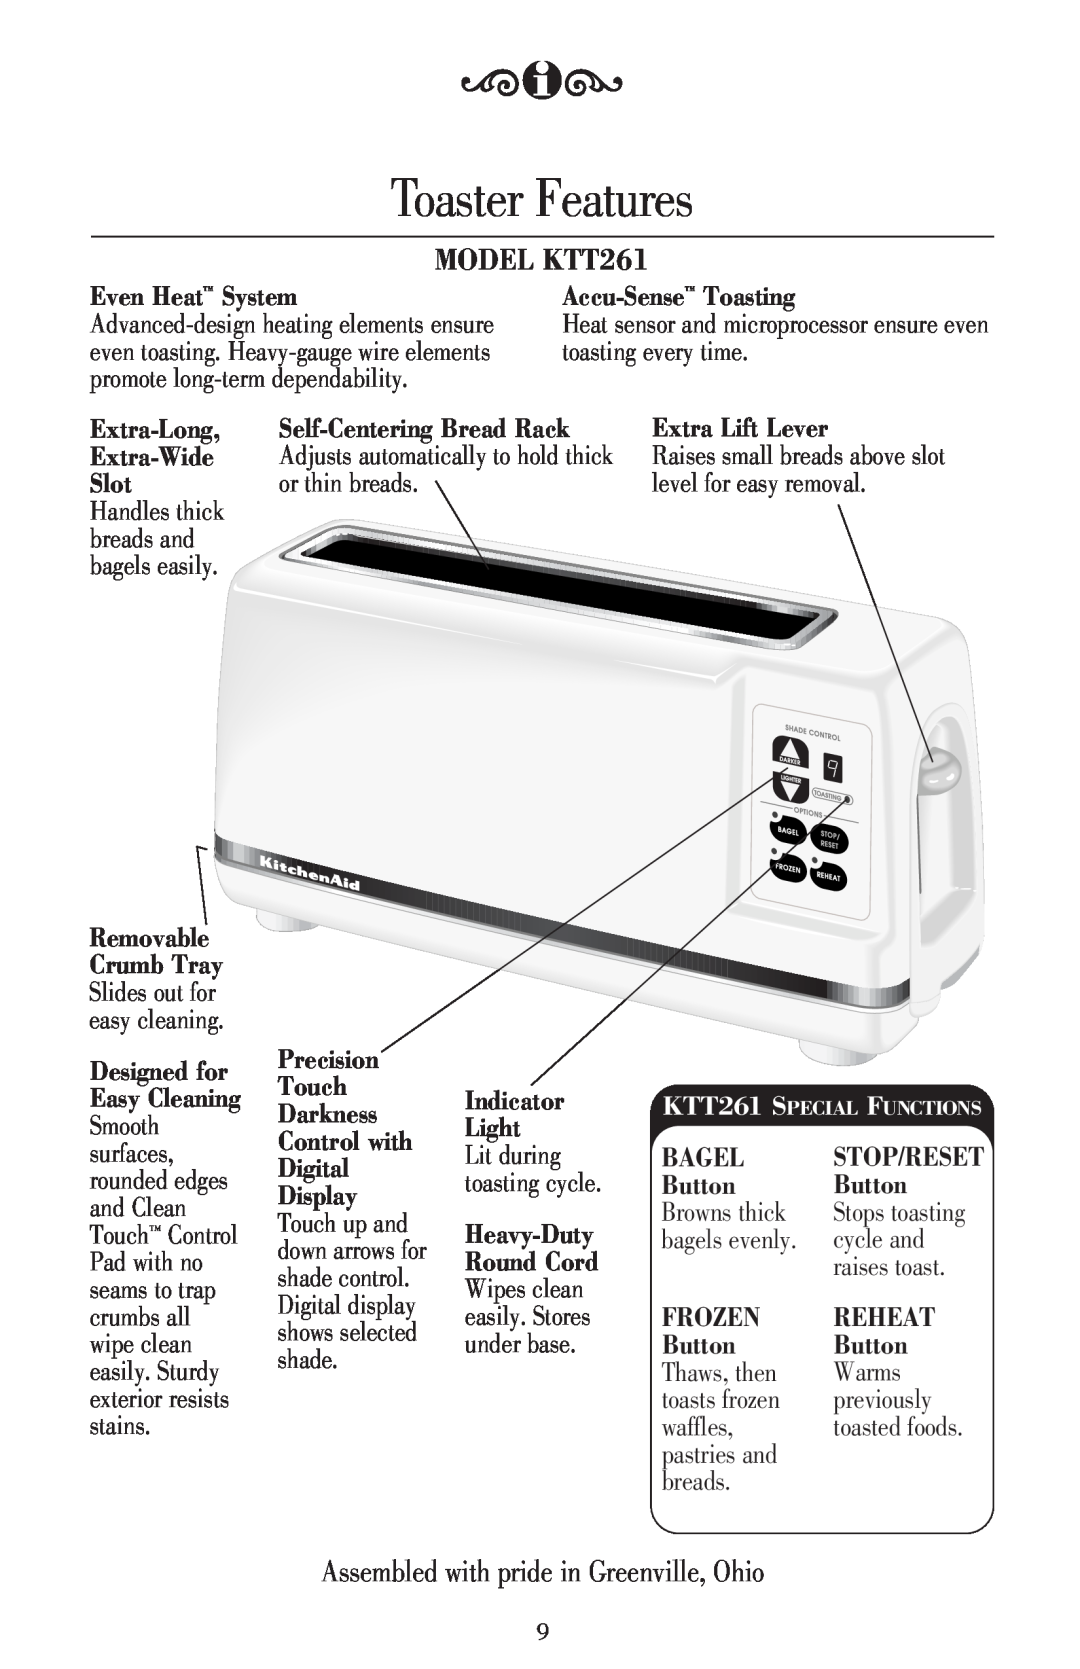 KitchenAid KTT220 manual Toaster Features, MODEL KTT261 